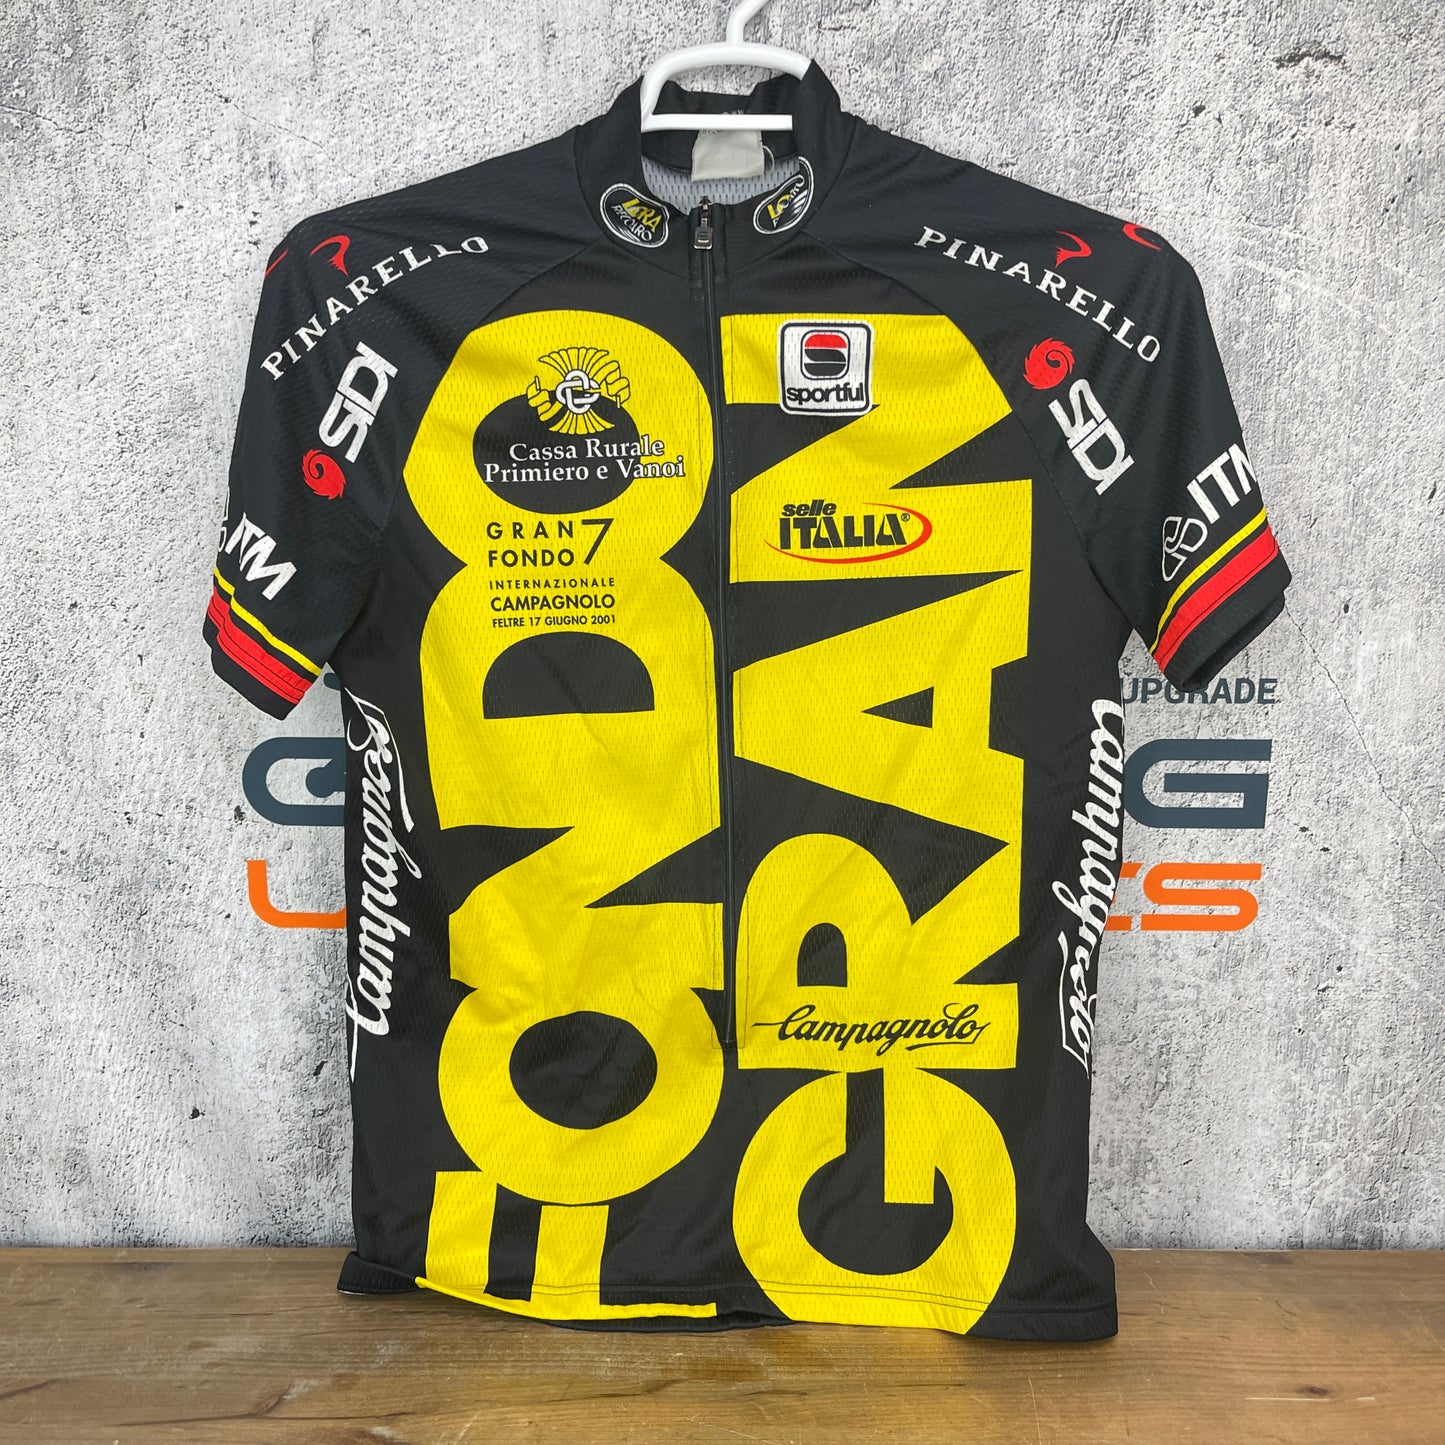 2001 Cassa Rurale Primiero e Vanoi Gran Fondo XL Men's Cycling Jersey Short Sleeve